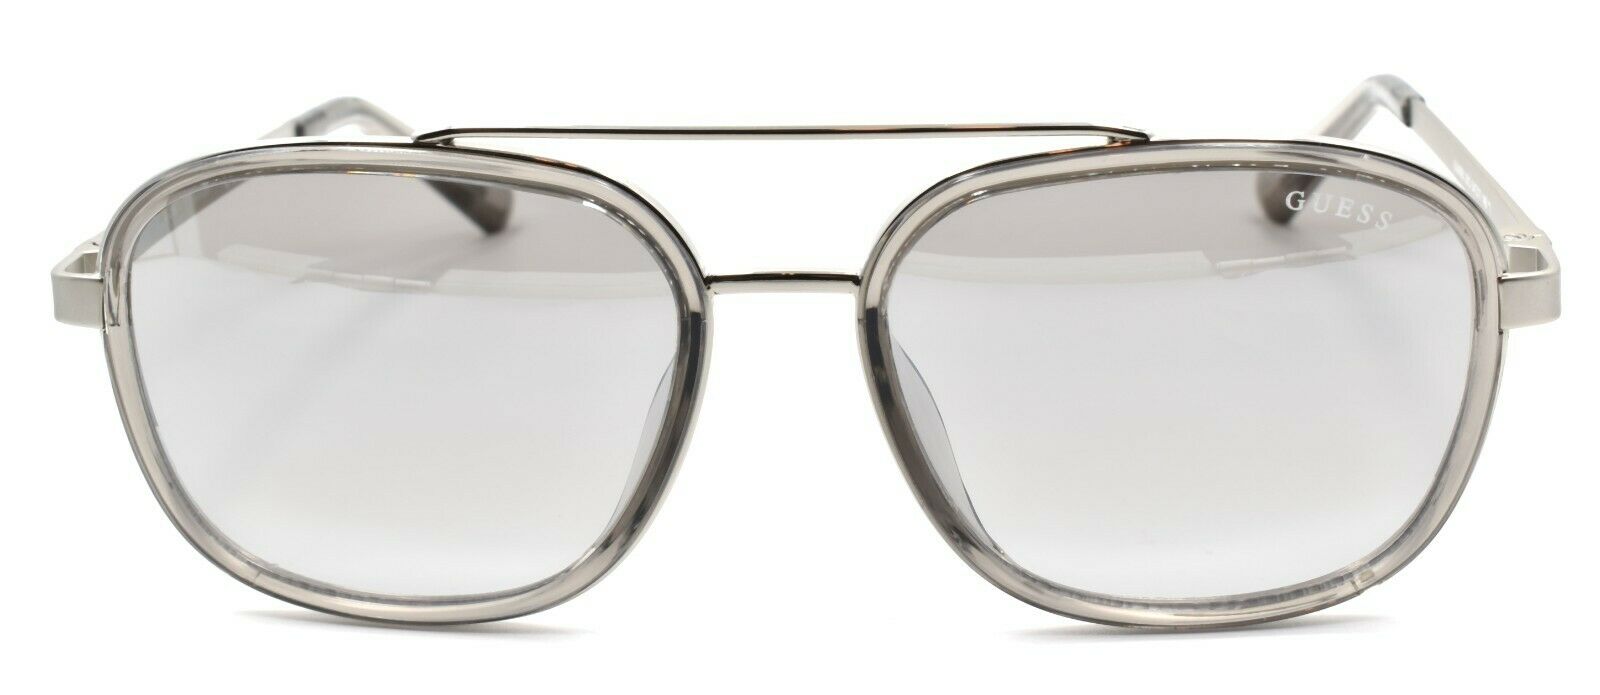 2-GUESS GU6950 20C Men's Sunglasses Aviator 54-17-145 Silver Gray Mirrored + CASE-889214045973-IKSpecs